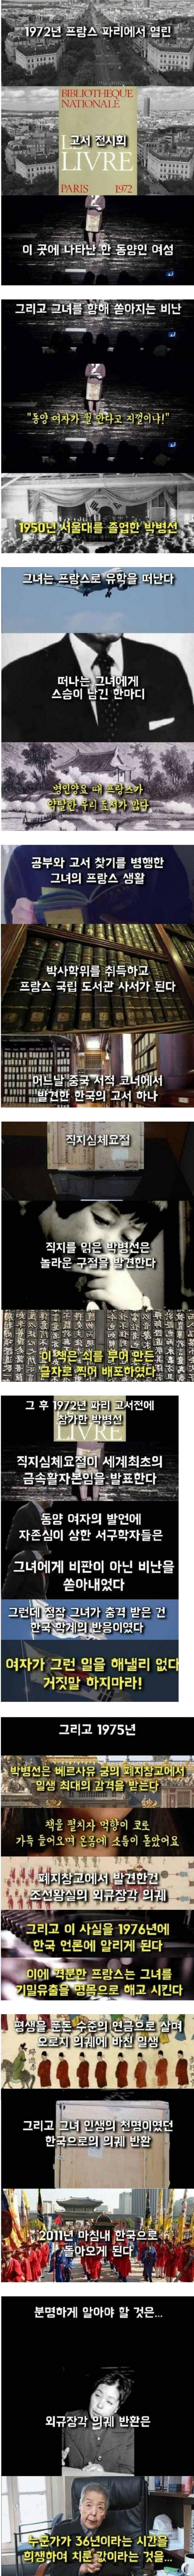 nokbeon.net-프랑스에서 동양인 이라고 무시받았던 한국여성-1번 이미지